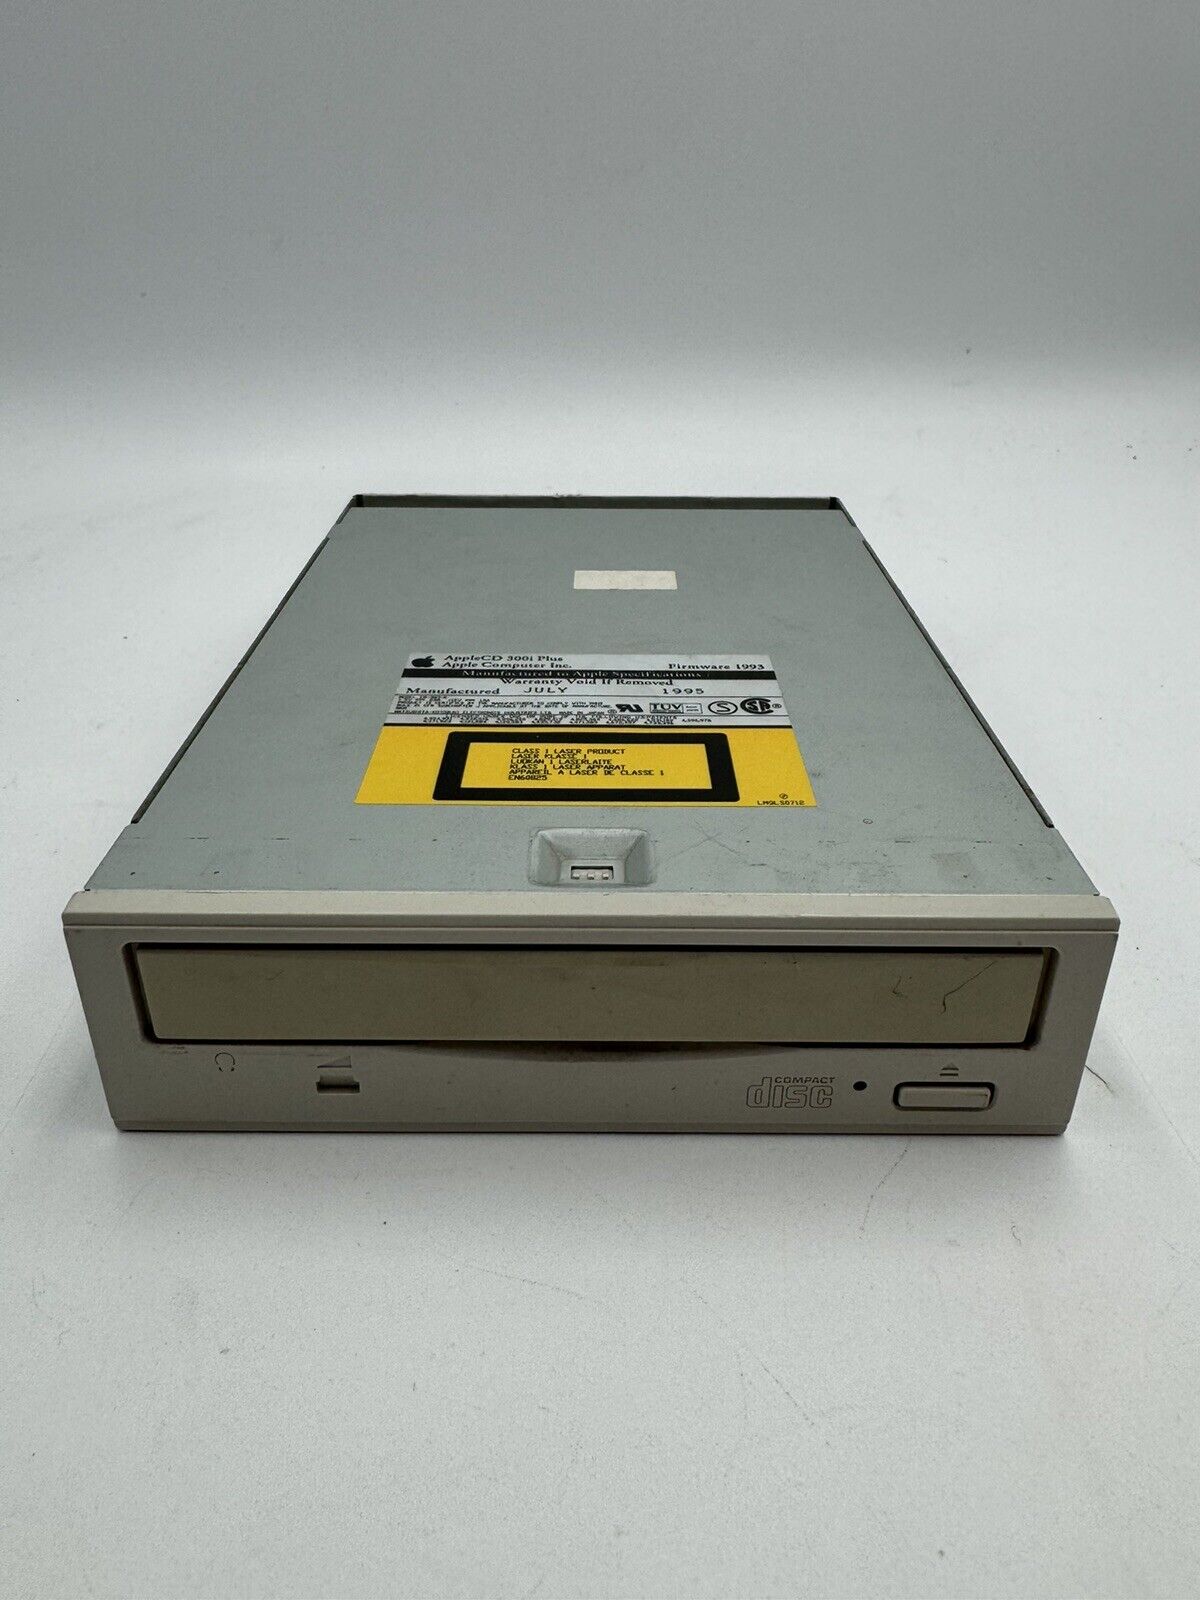 AppleCD 300i Plus internal SCSI CD-ROM Drive UNTESTED Vintage